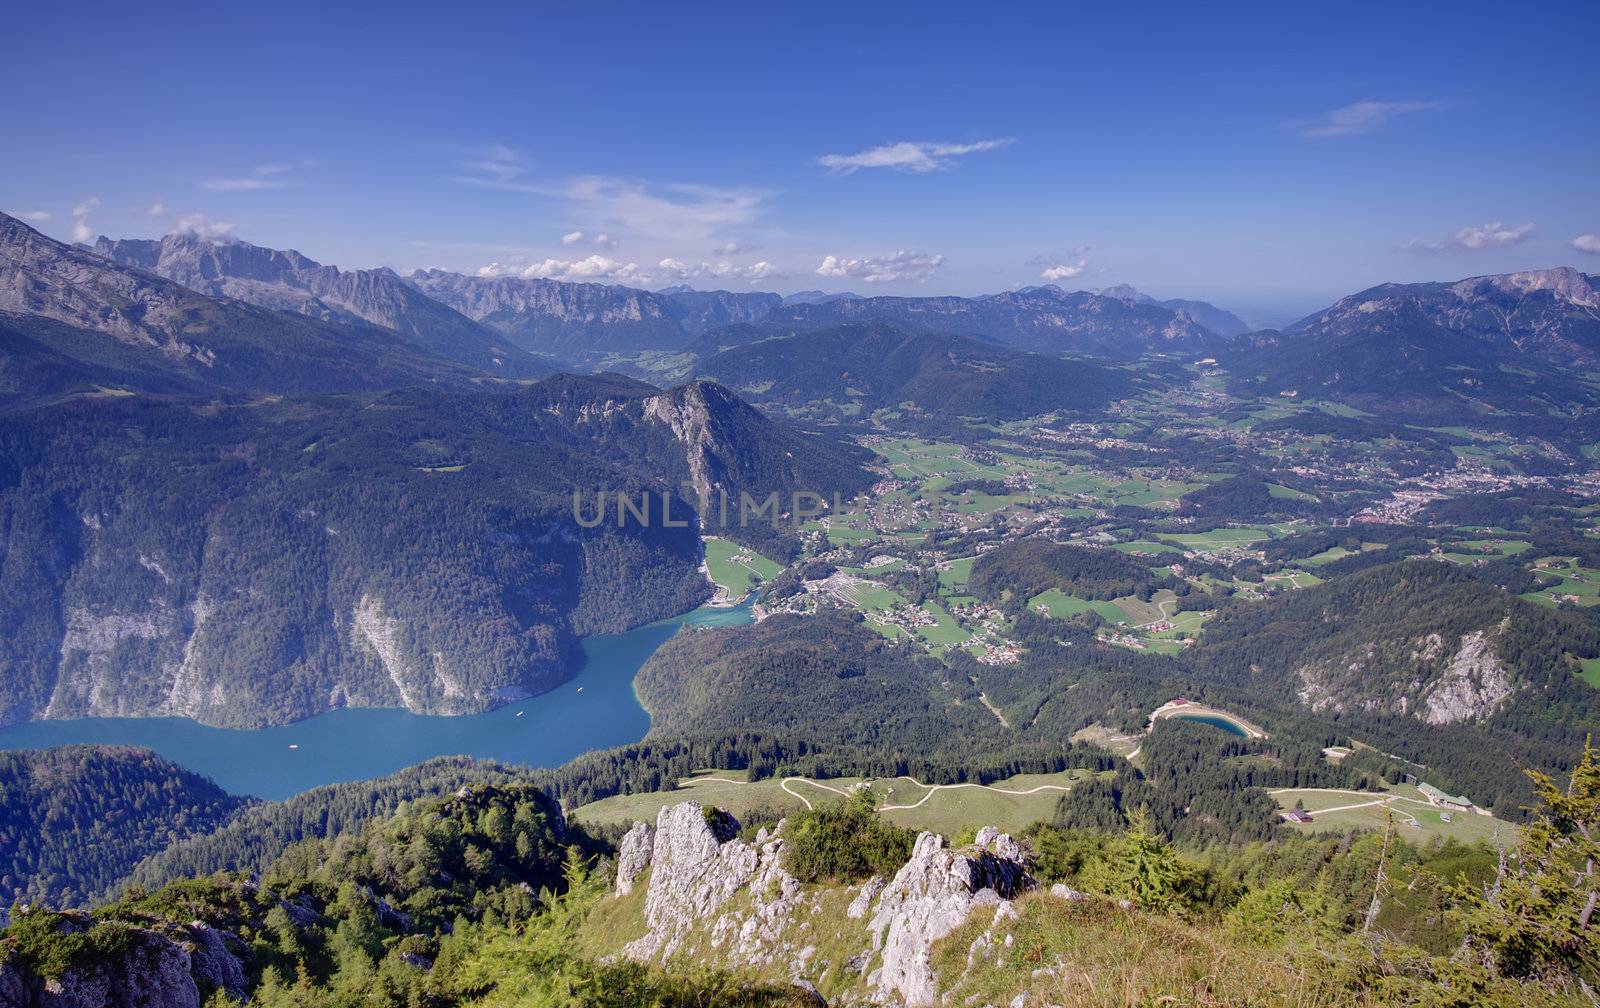 Konigssee lake in Bavarian Alps, Germany